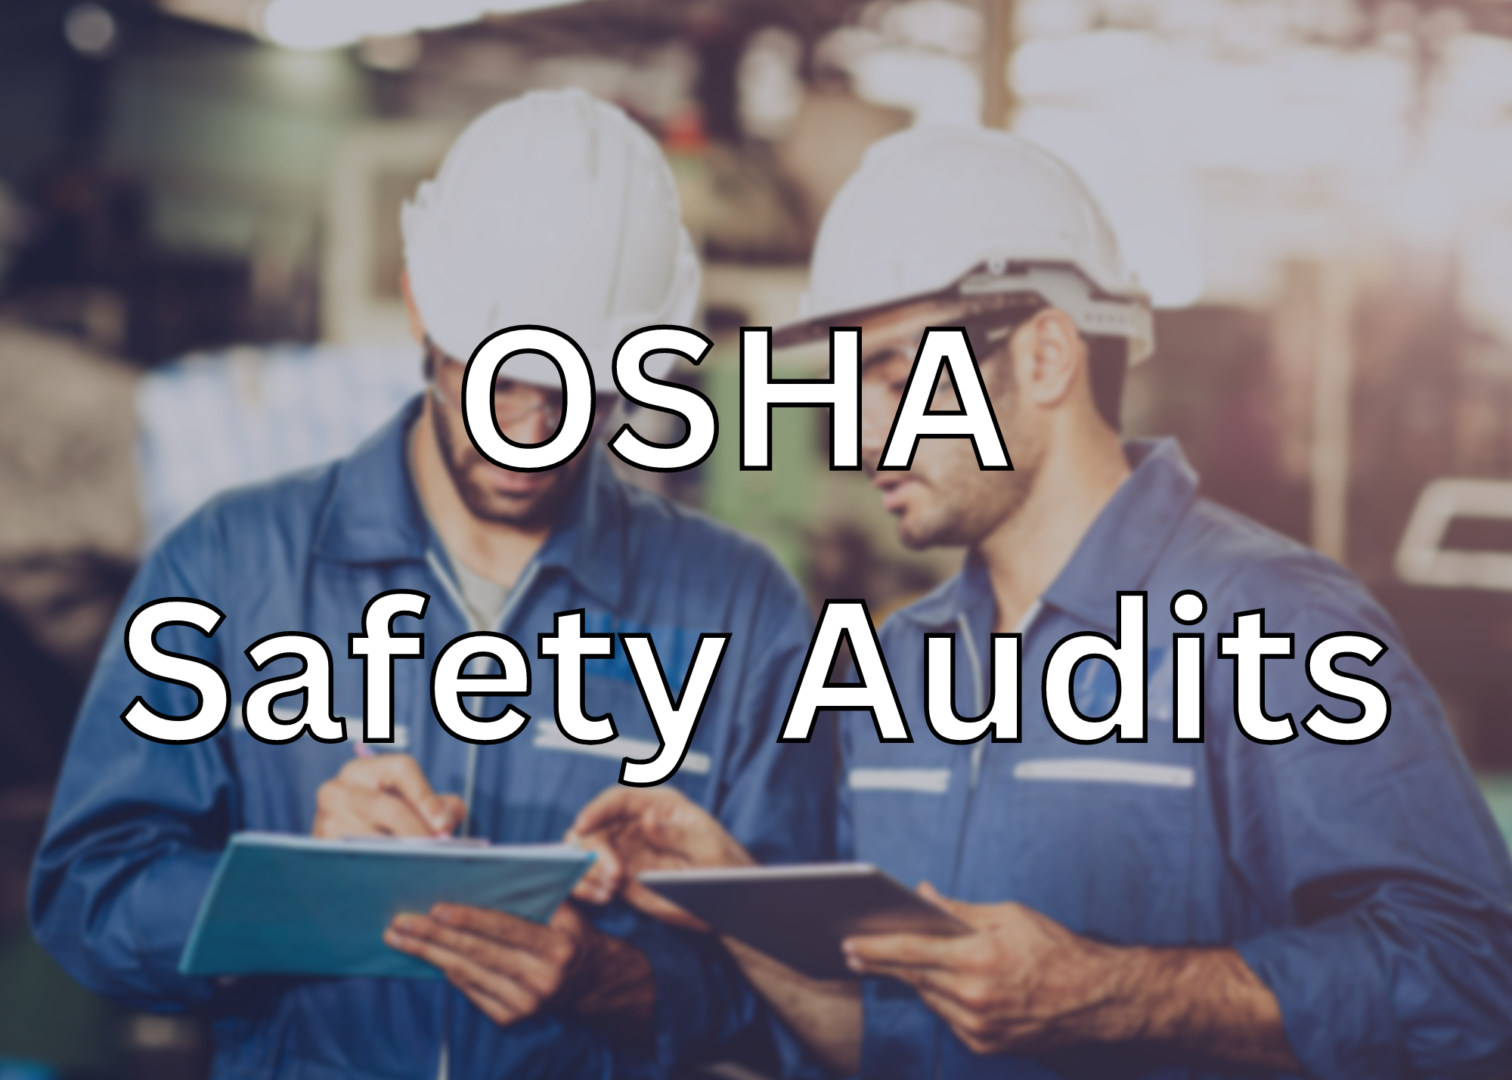 OSHA Safety Audits